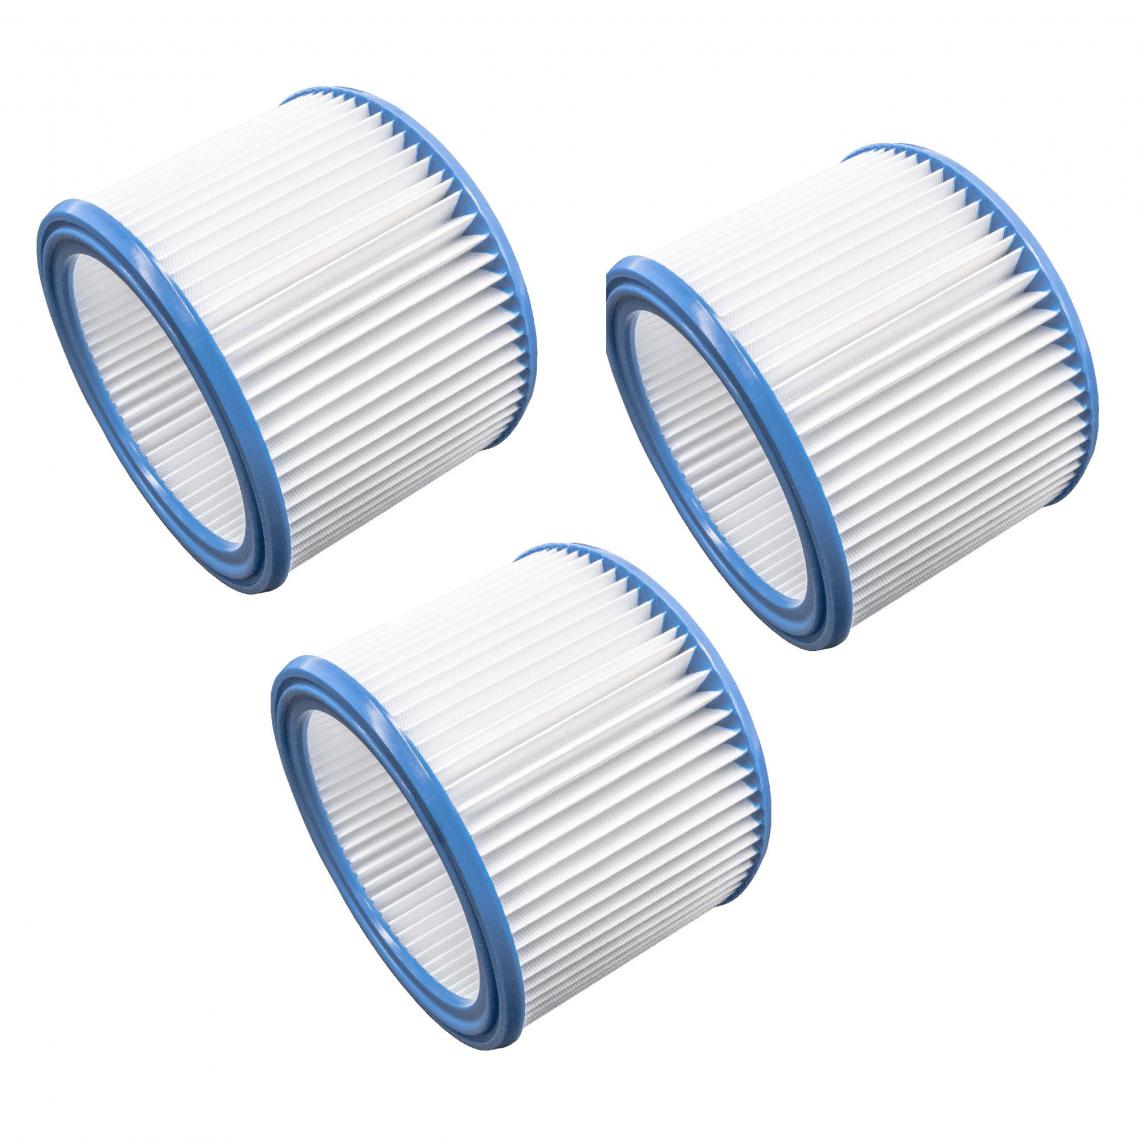 Vhbw - vhbw Set de filtres 3x Filtre plissé compatible avec Nilfisk Attix 751-21, 791-21 EC, 791-2M/B1 aspirateur à sec ou humide - Filtre à cartouche - Accessoire entretien des sols